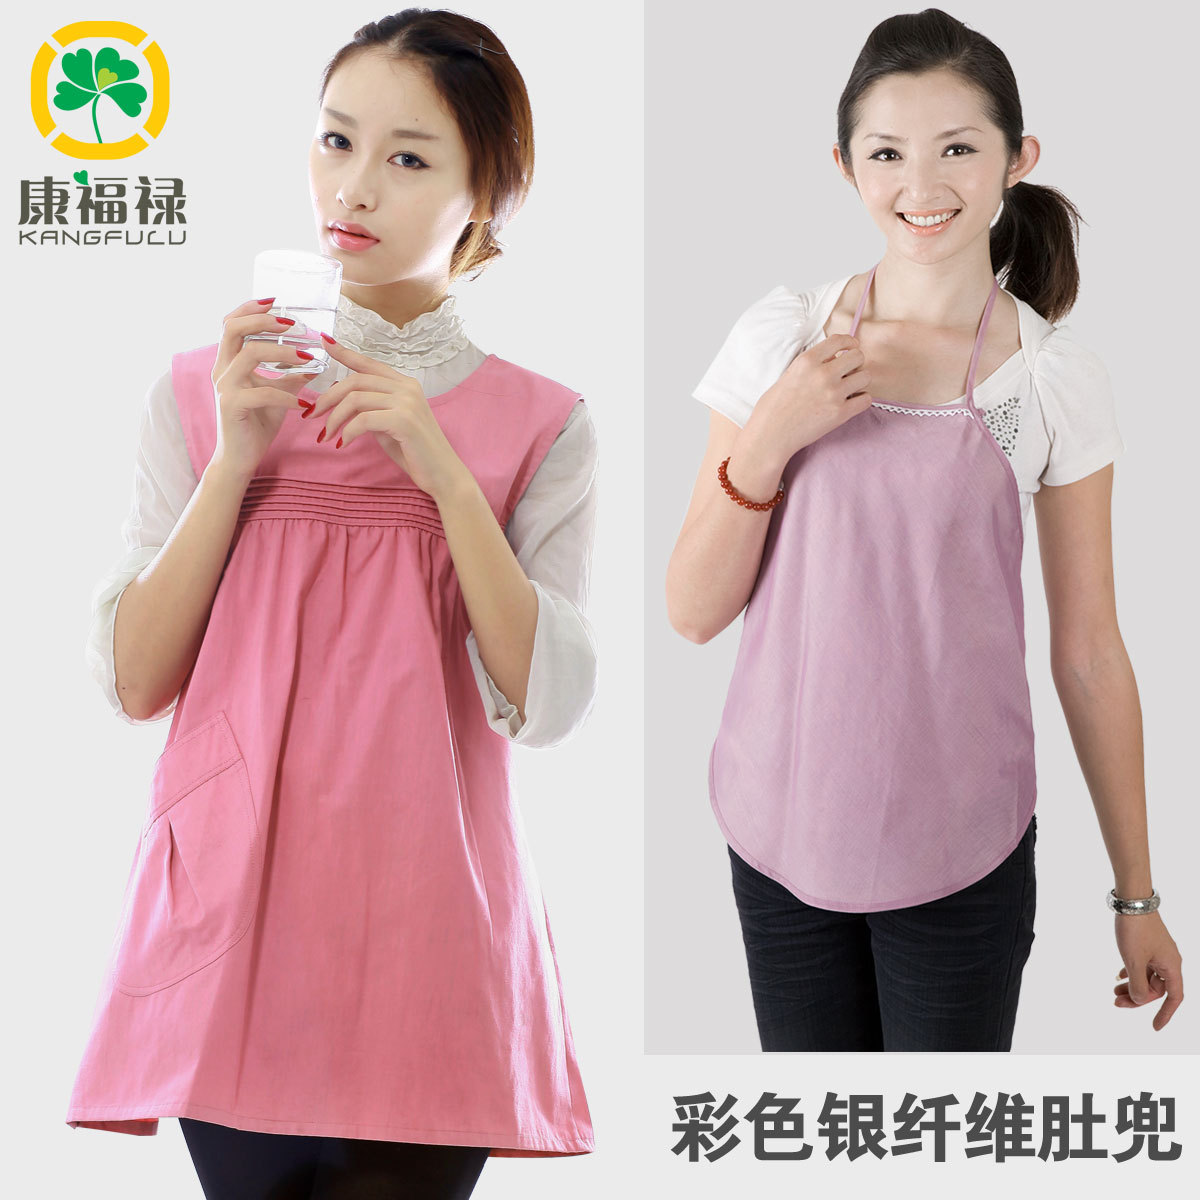 Silver fiber radiation-resistant maternity clothing vest maternity radiation-resistant 604a maternity dress